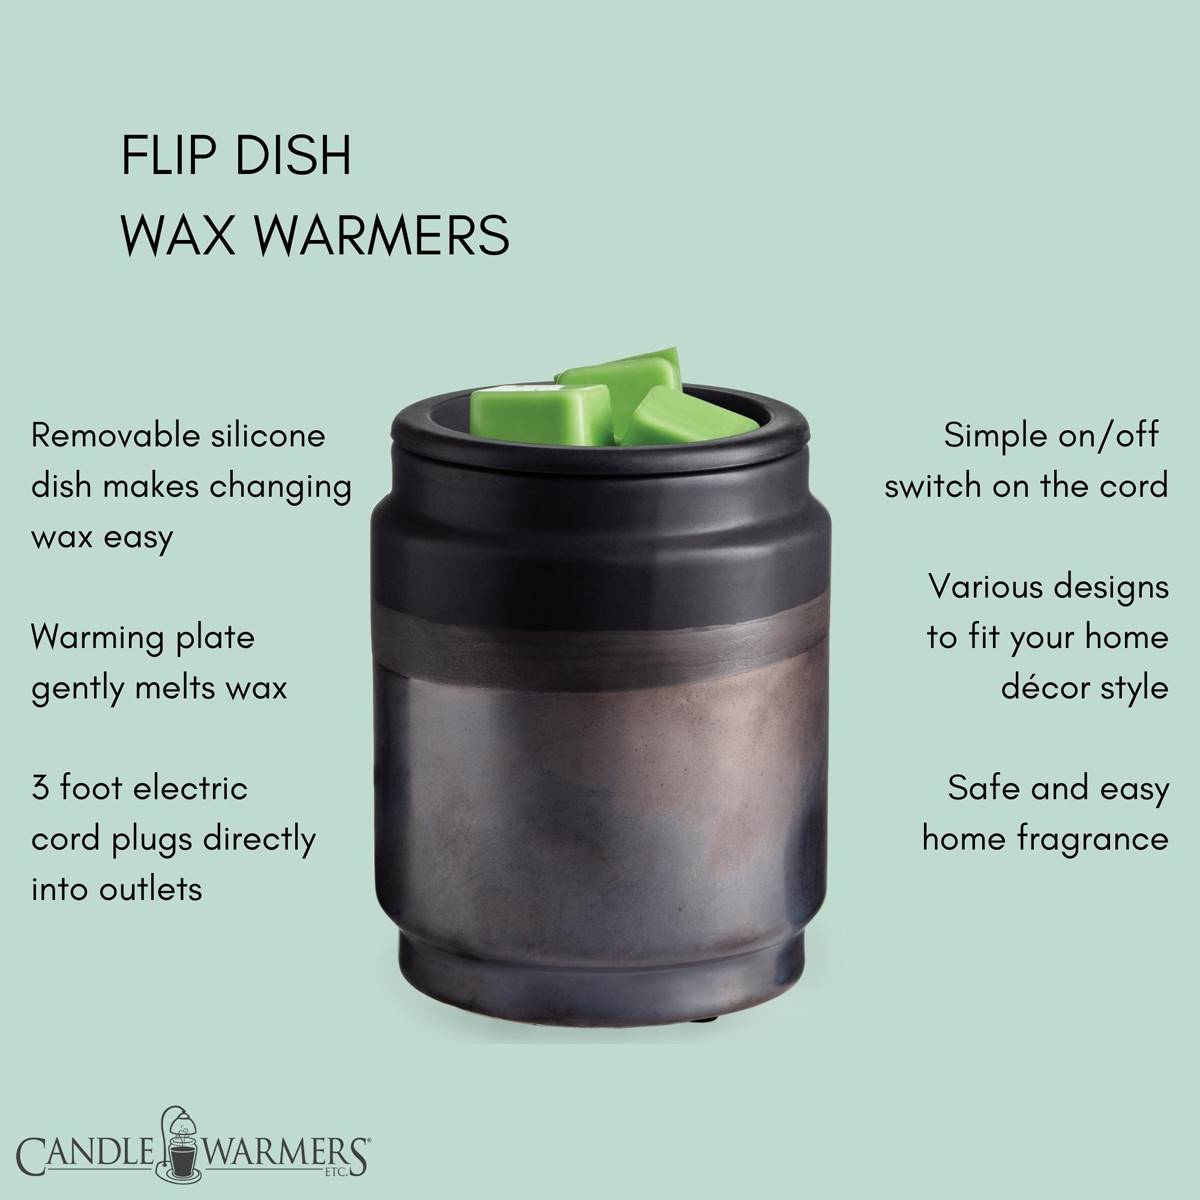 Candle Warmers Etc. Black Dipped Flip Dish Wax Warmer